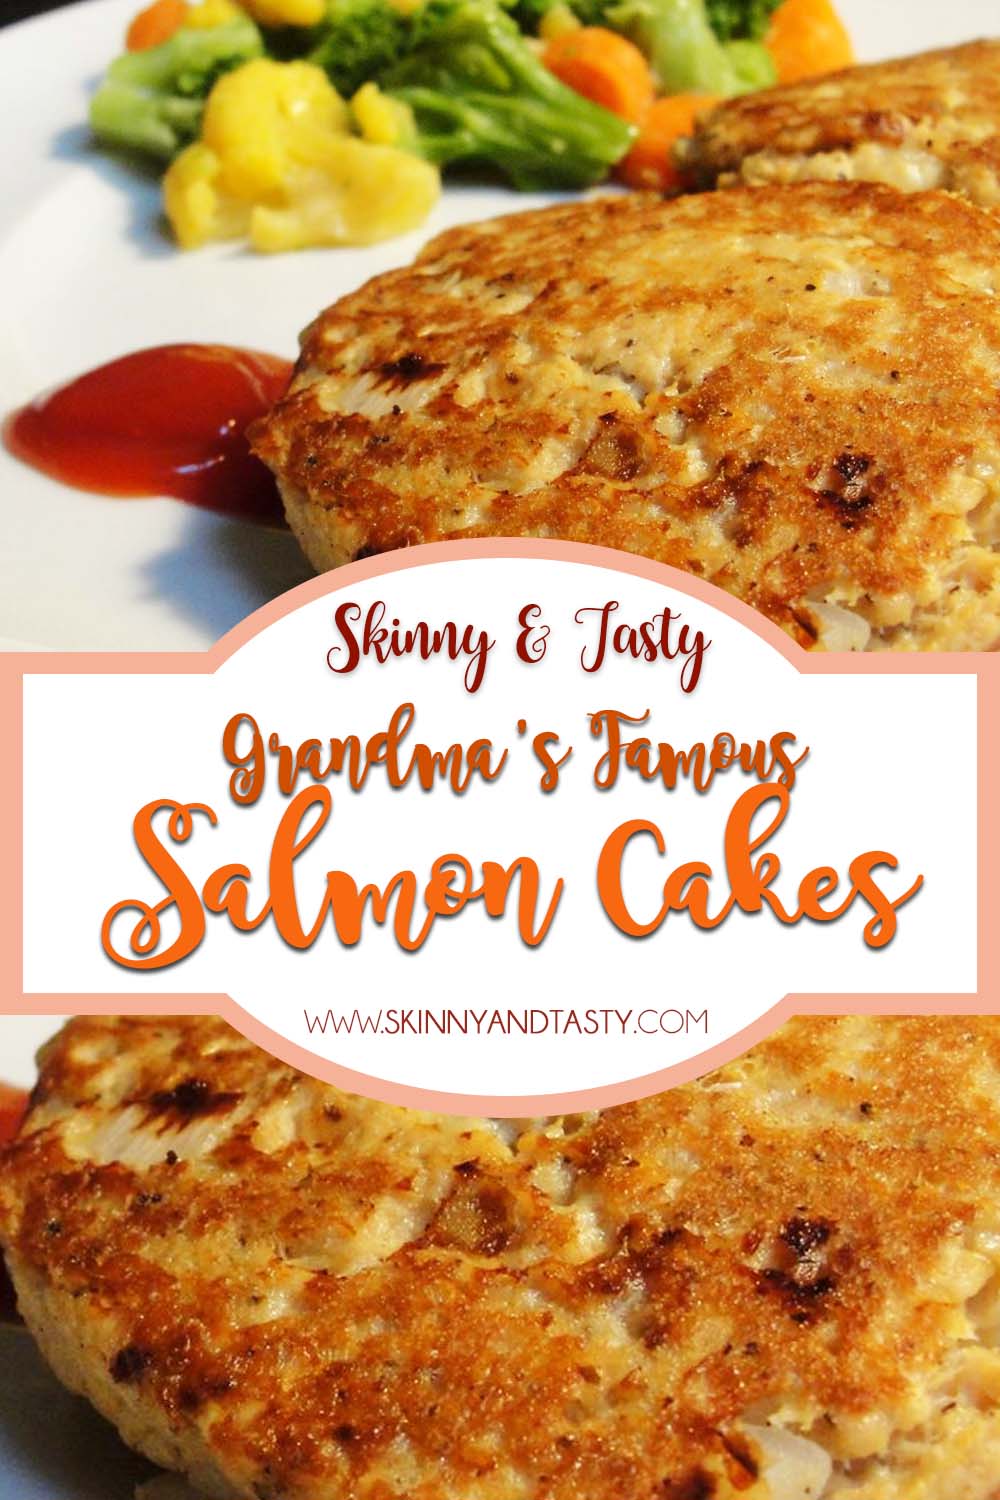 Grandma's Famous Salmon Cakes